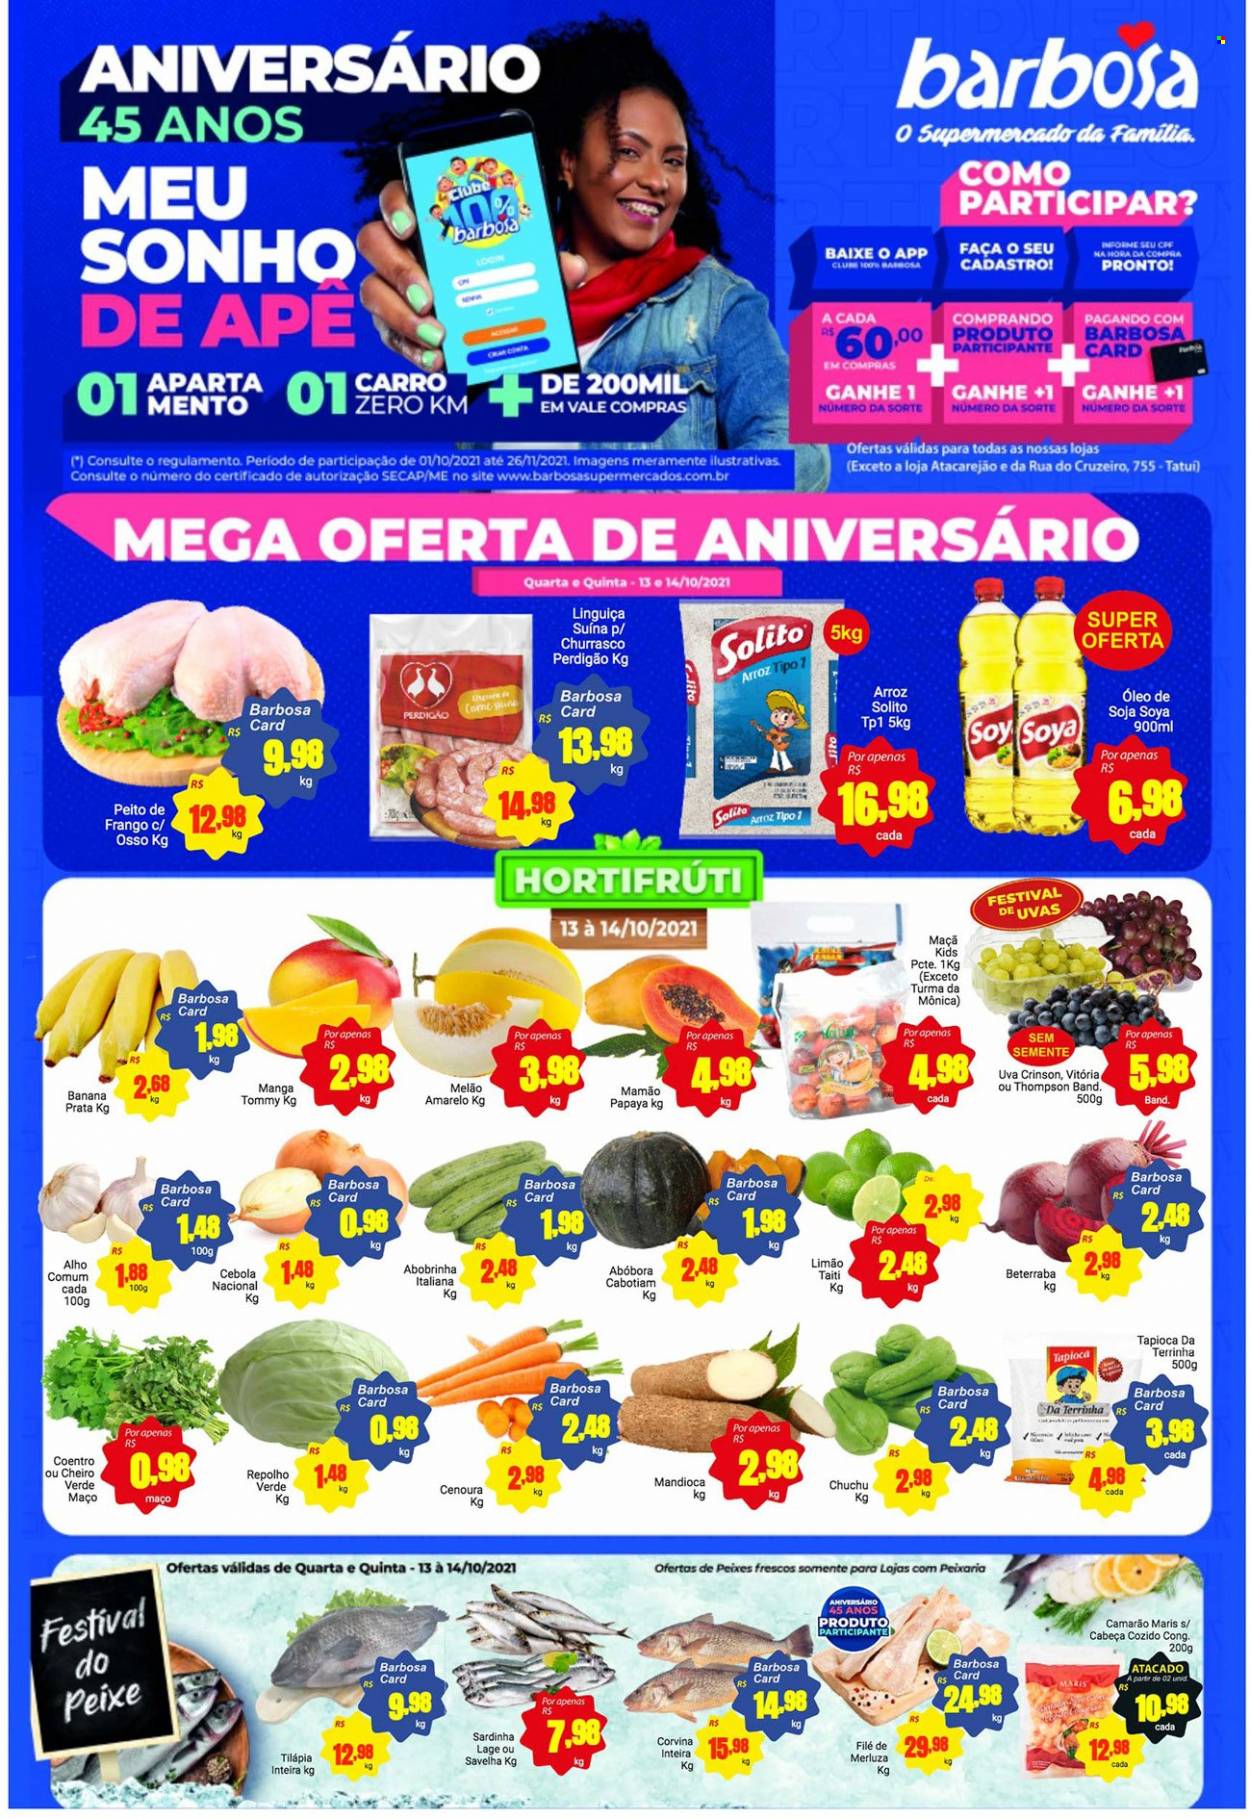 Encarte Barbosa Supermercados  - 13.10.2021 - 14.10.2021.